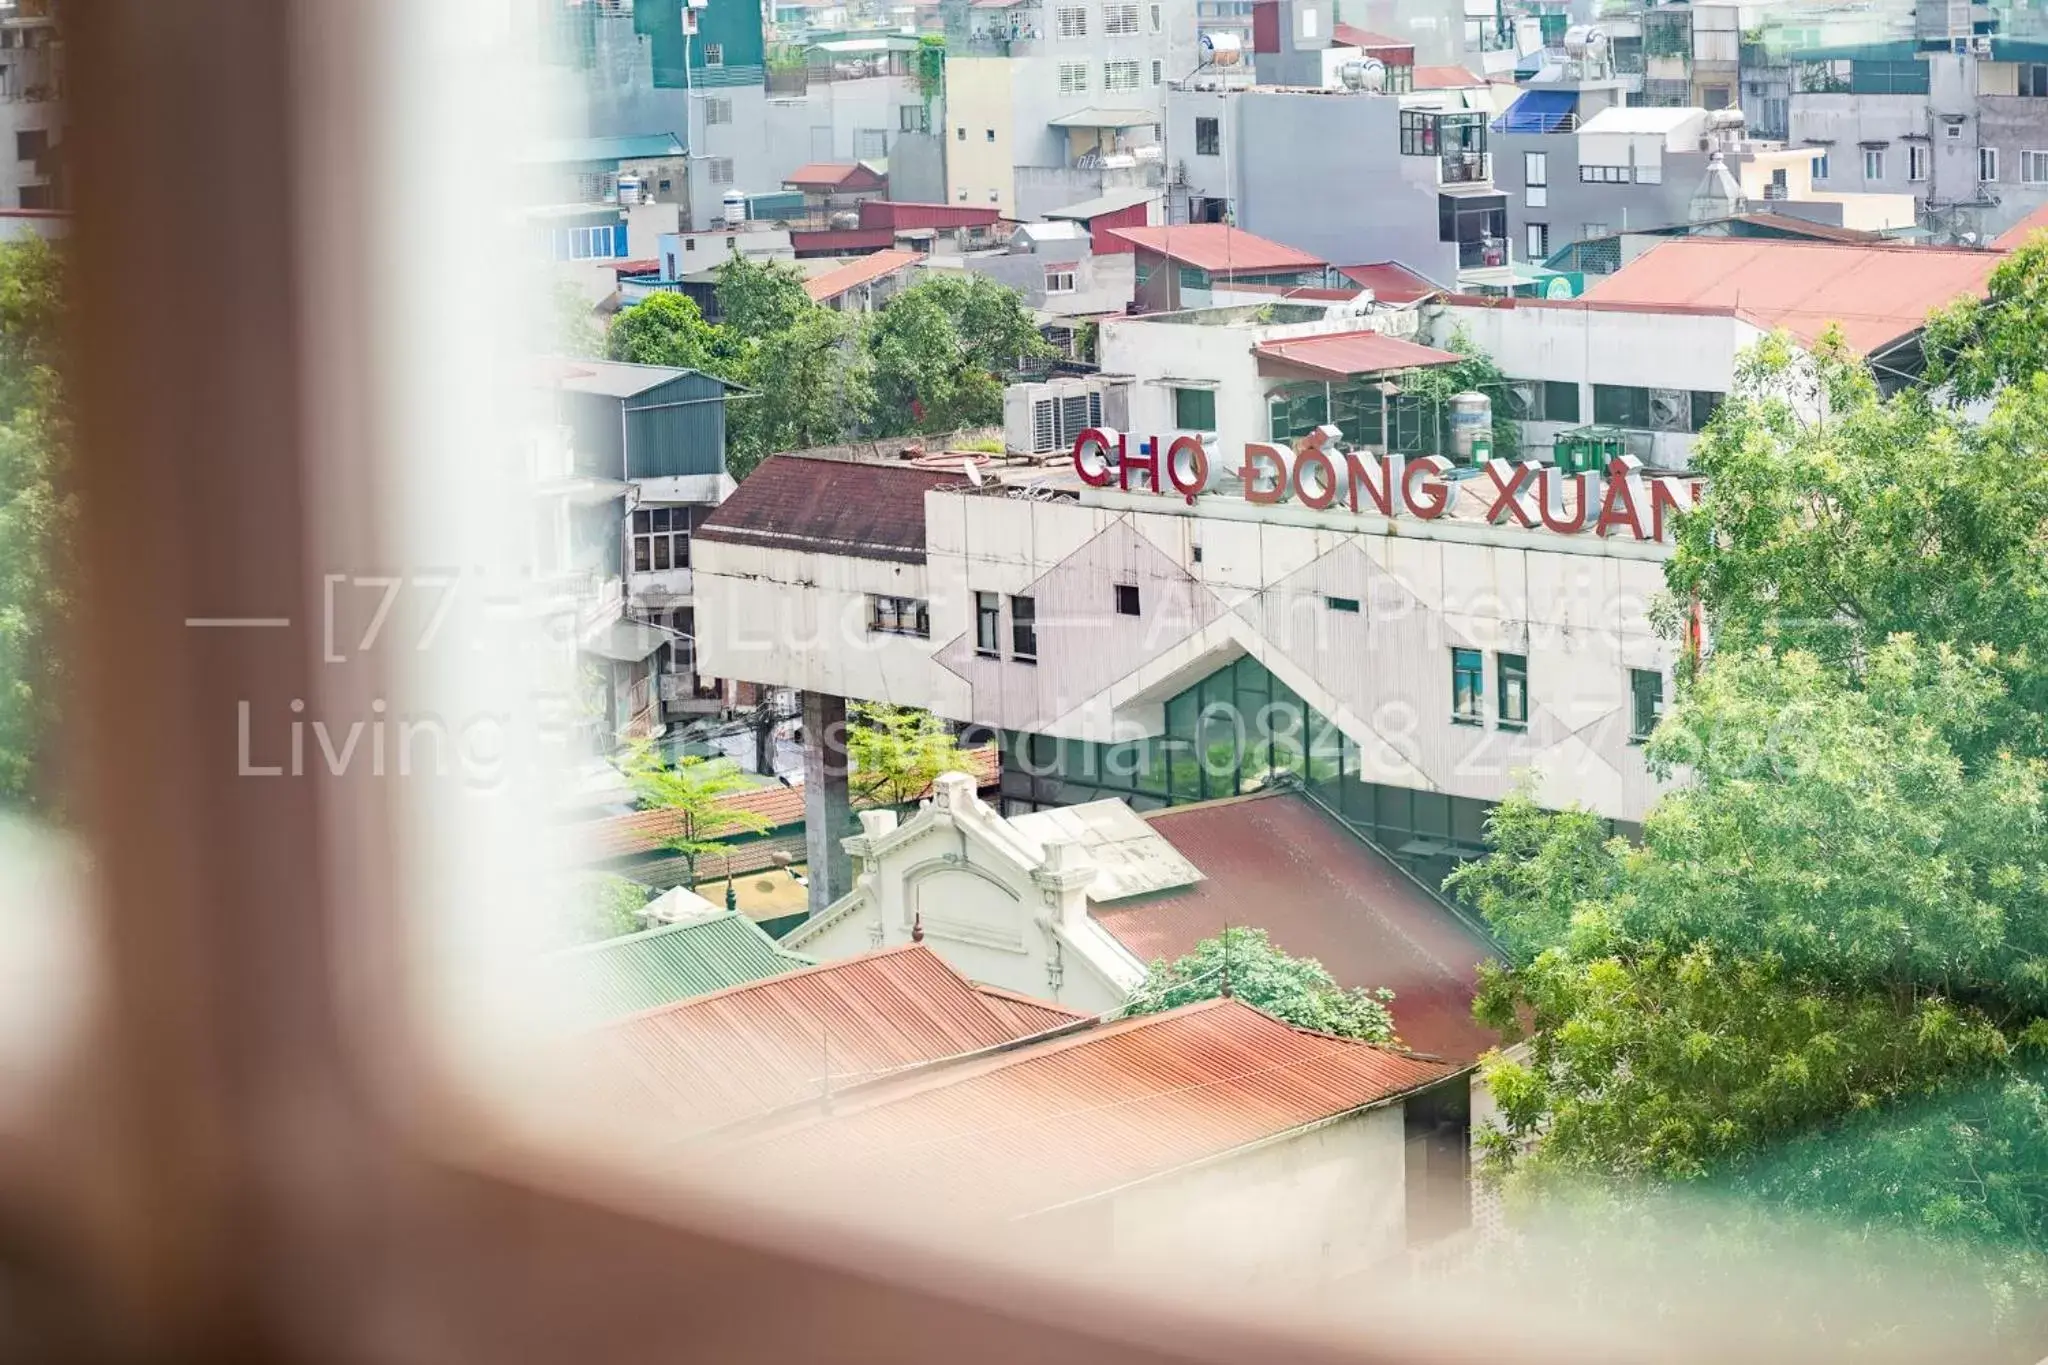 Neighbourhood in Hanoi Little Town Hotel